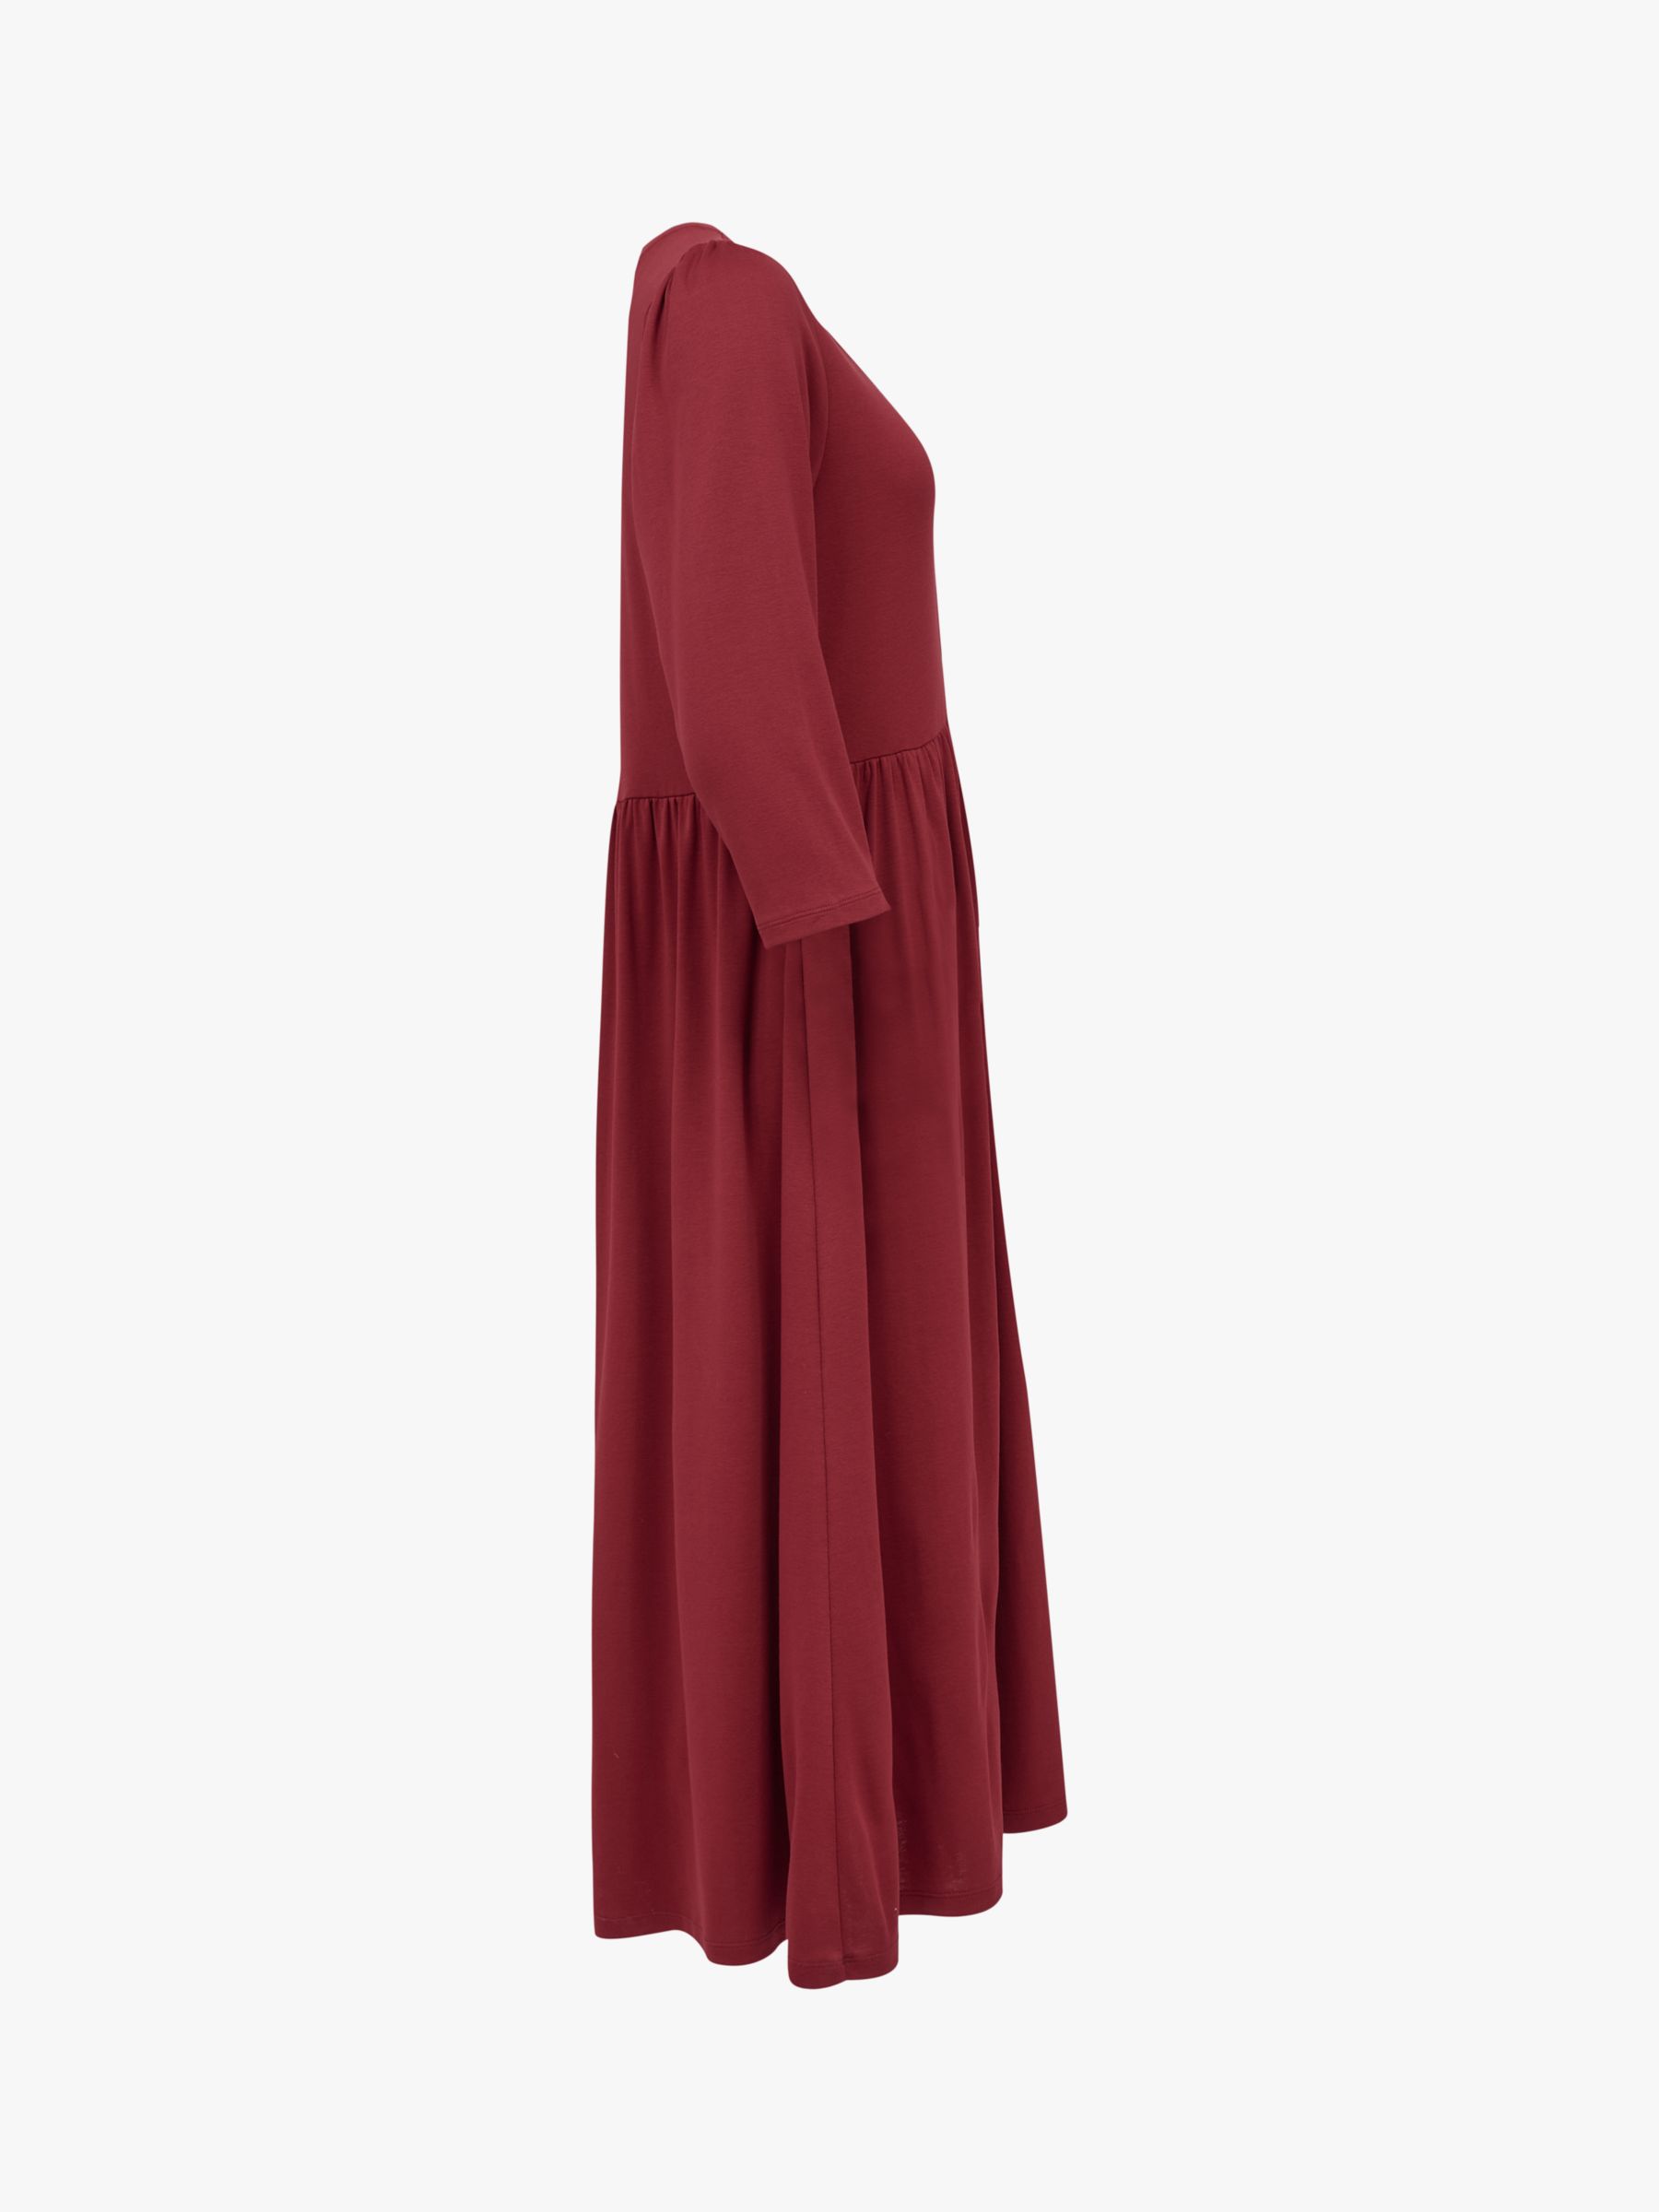 Celtic & Co. Organic Cotton Jersey Midi Dress, Pillarbox Red, 12